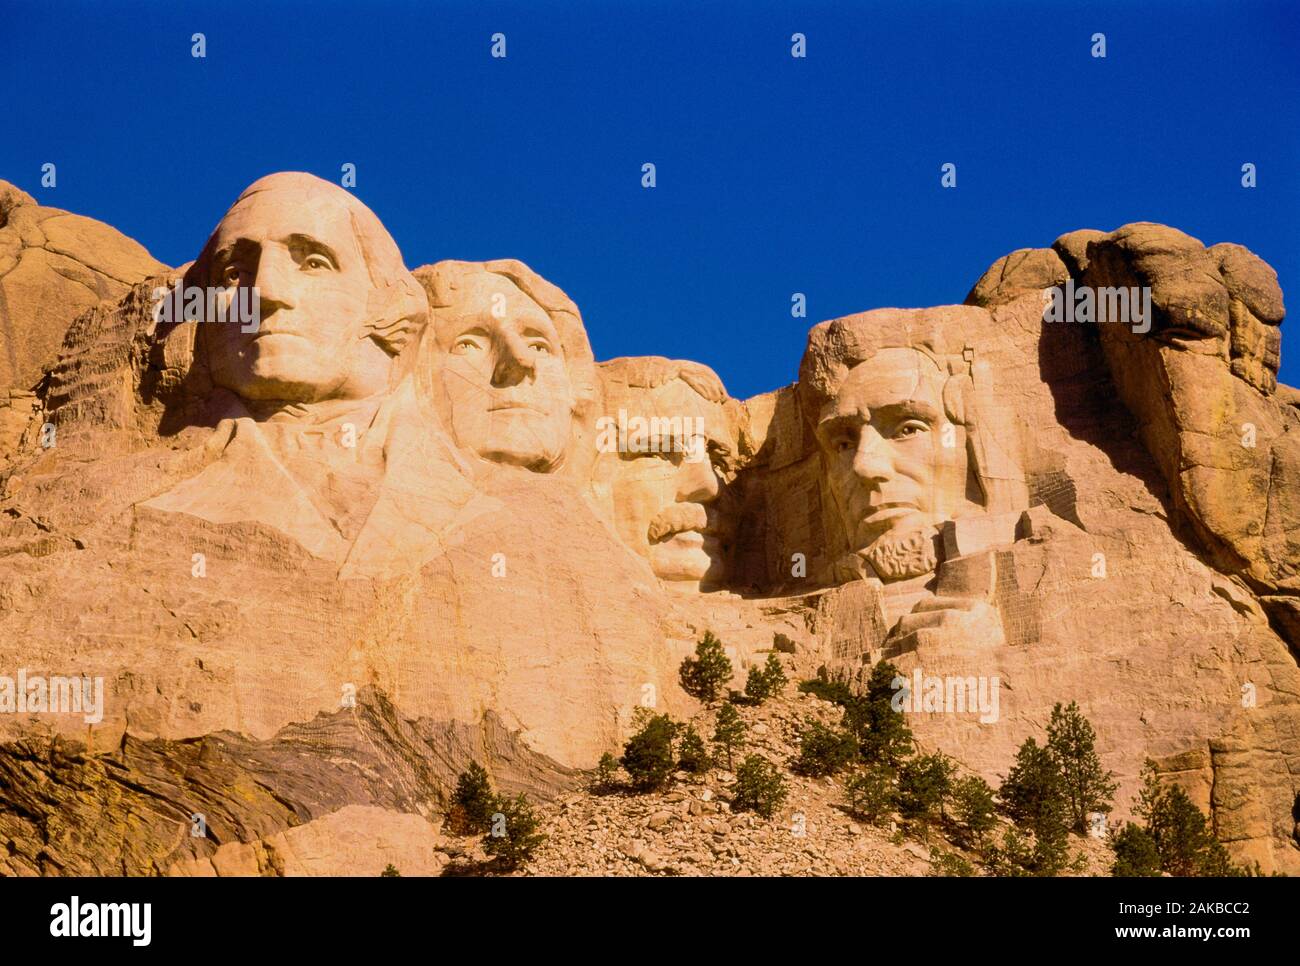 View of Mount Rushmore National Memorial, South Dakota, USA Stock Photo